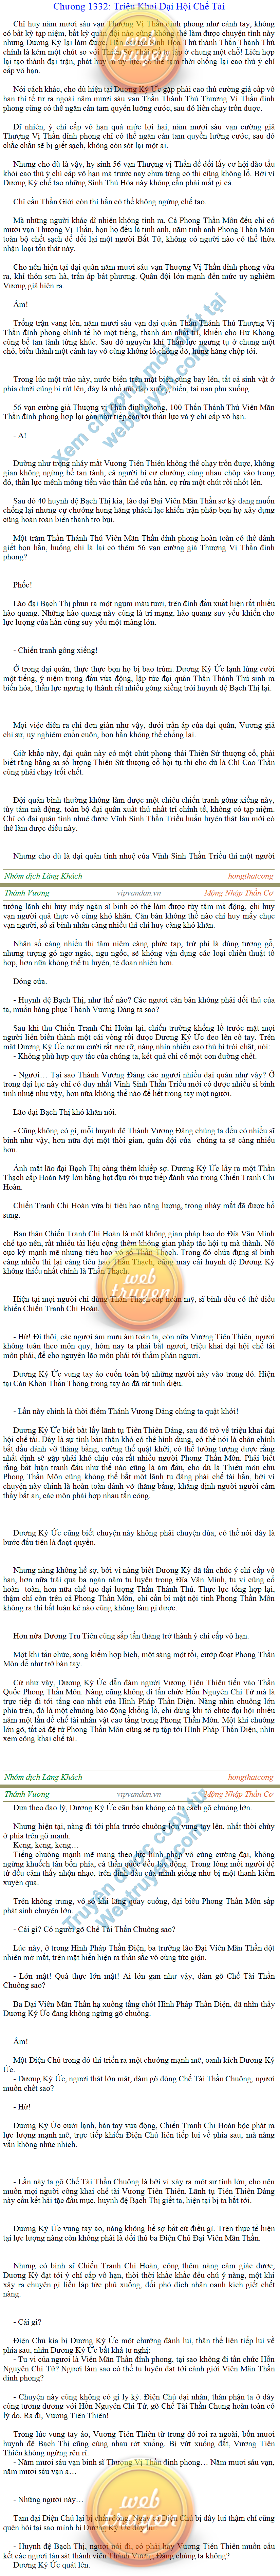 Thanh-vuong-1332.png